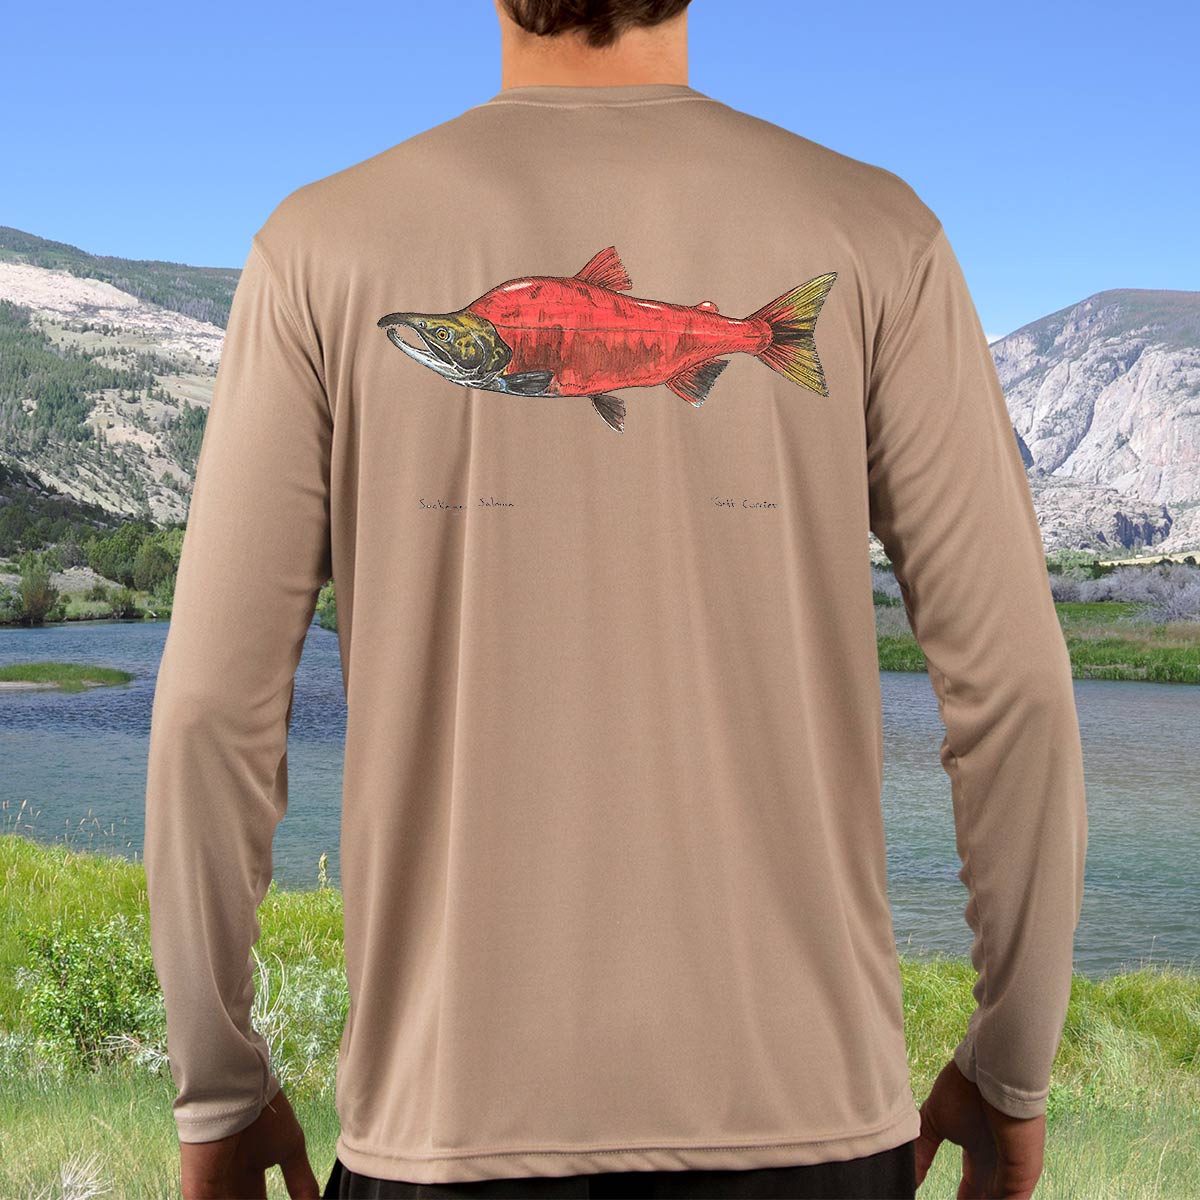 https://www.jeffcurrier.com/wp-content/uploads/2018/08/sockeye-salmon-jeff-currier-long-sleeve-solar-shirt-tan.jpg